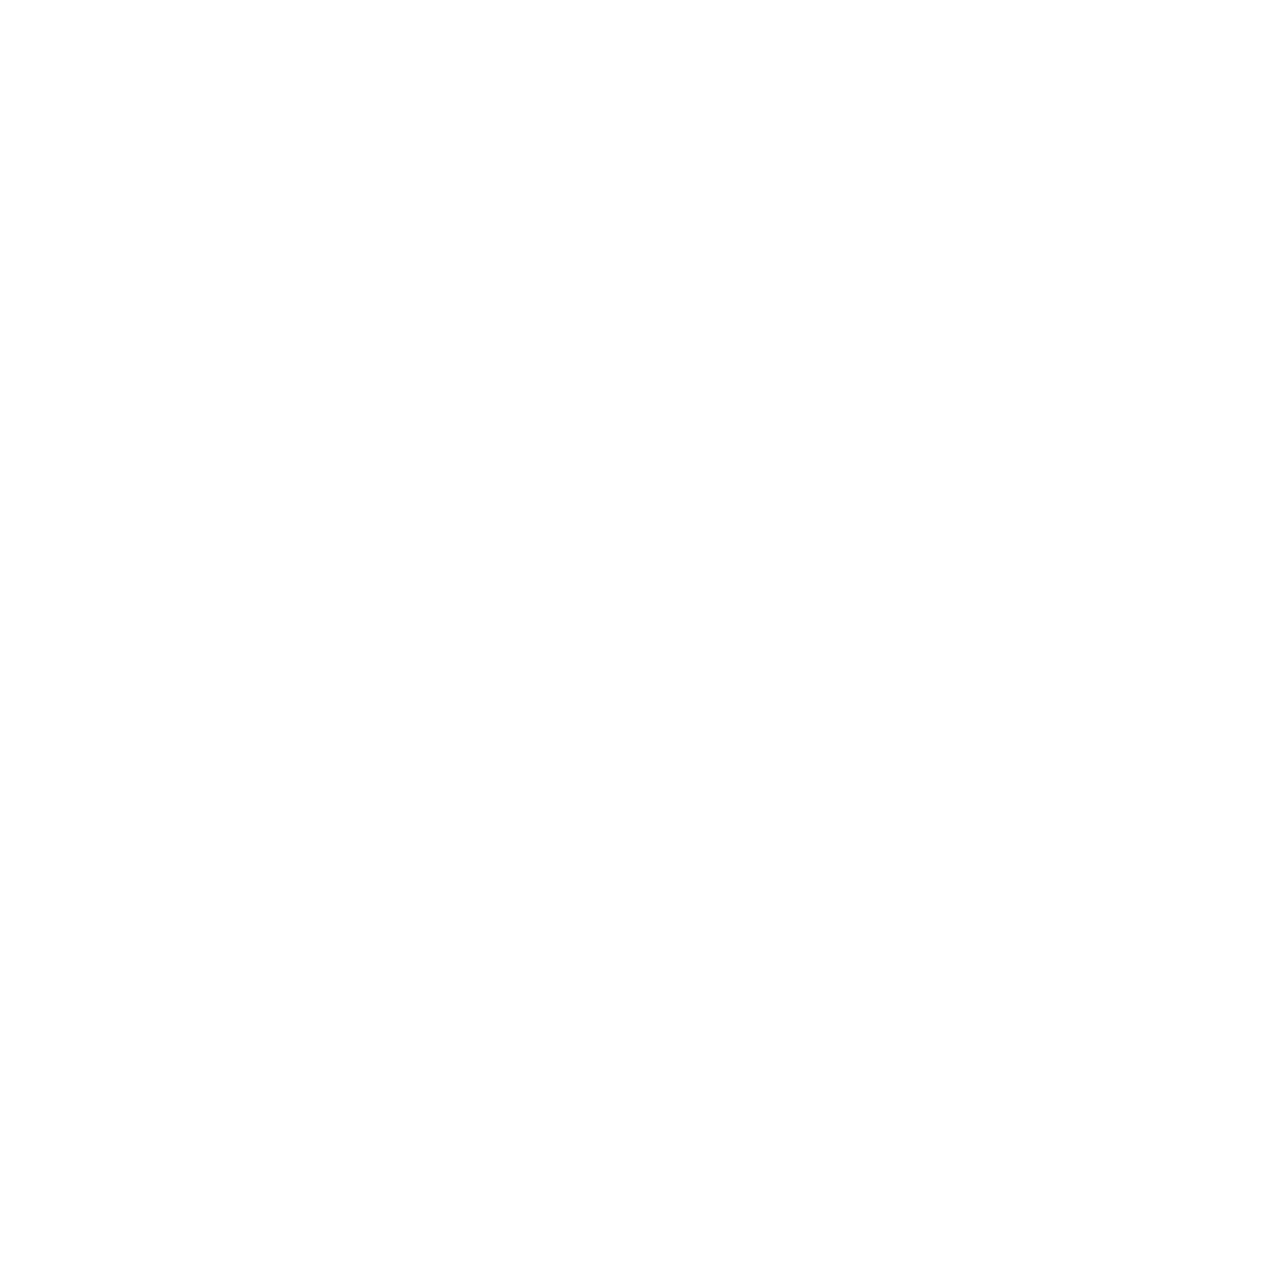 WELDING WARRIORS's web page